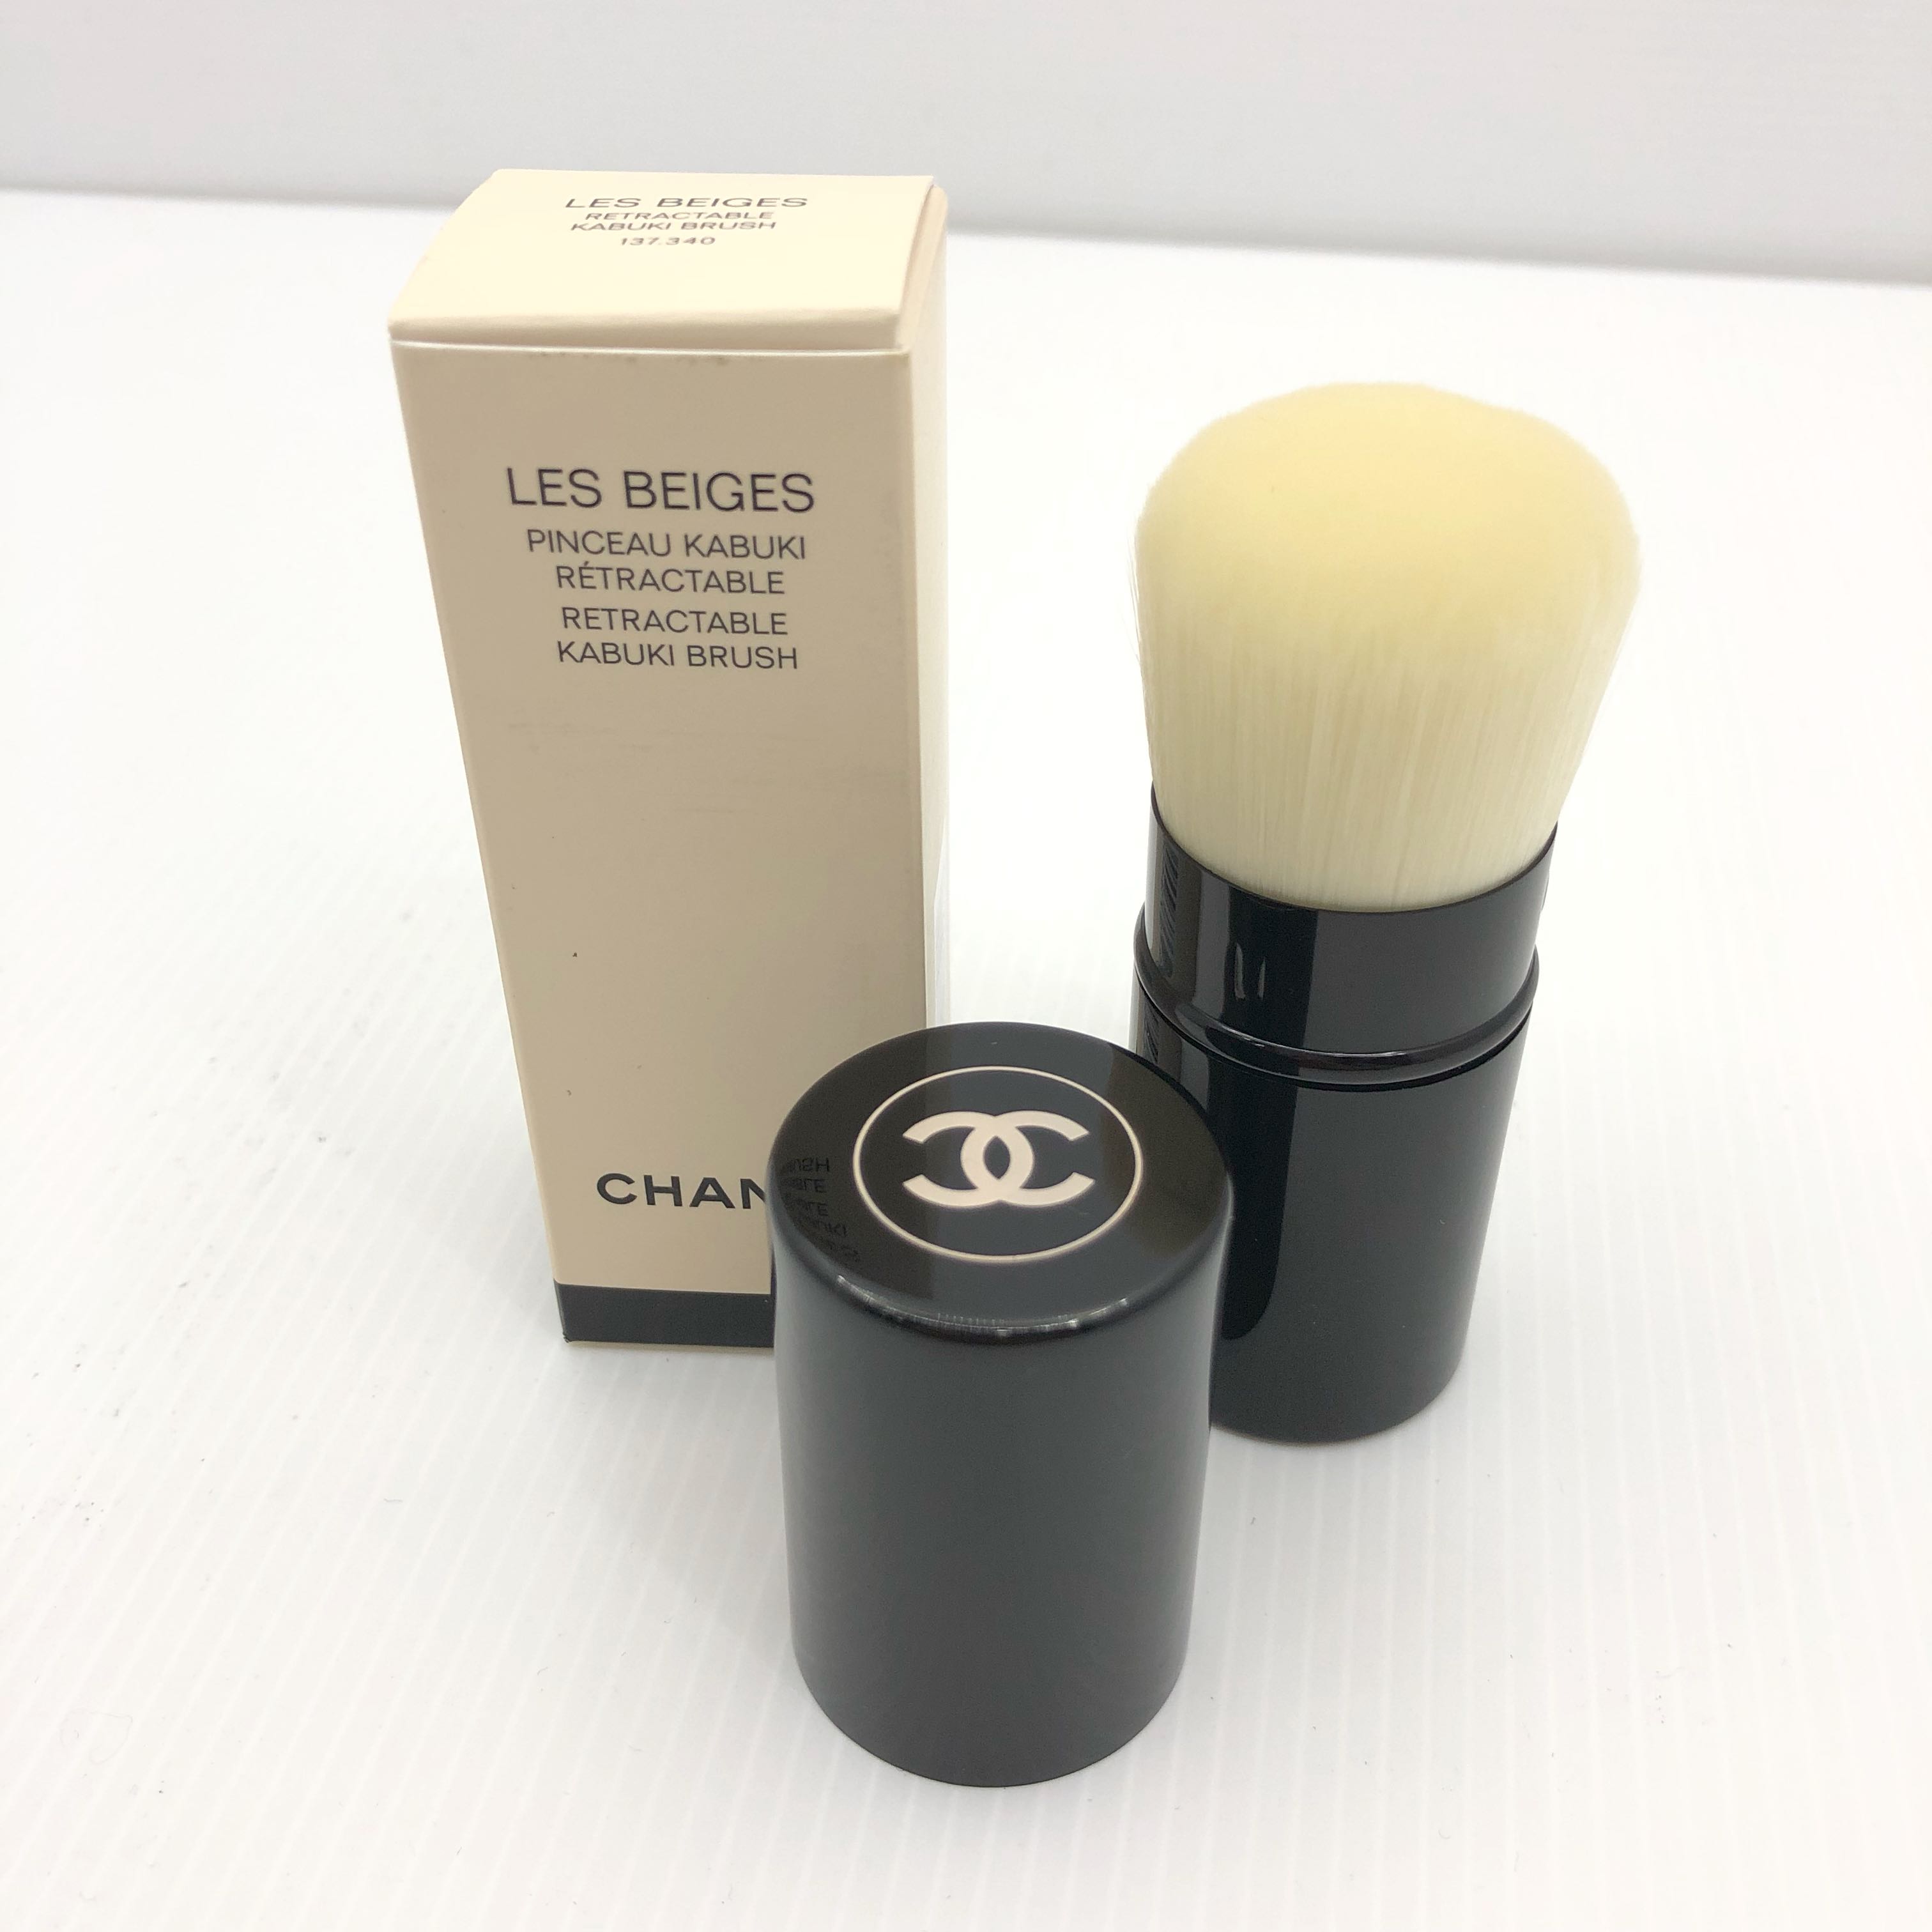 First Impression Chanel Les Beiges Powder and Travel Kabuki Brush 